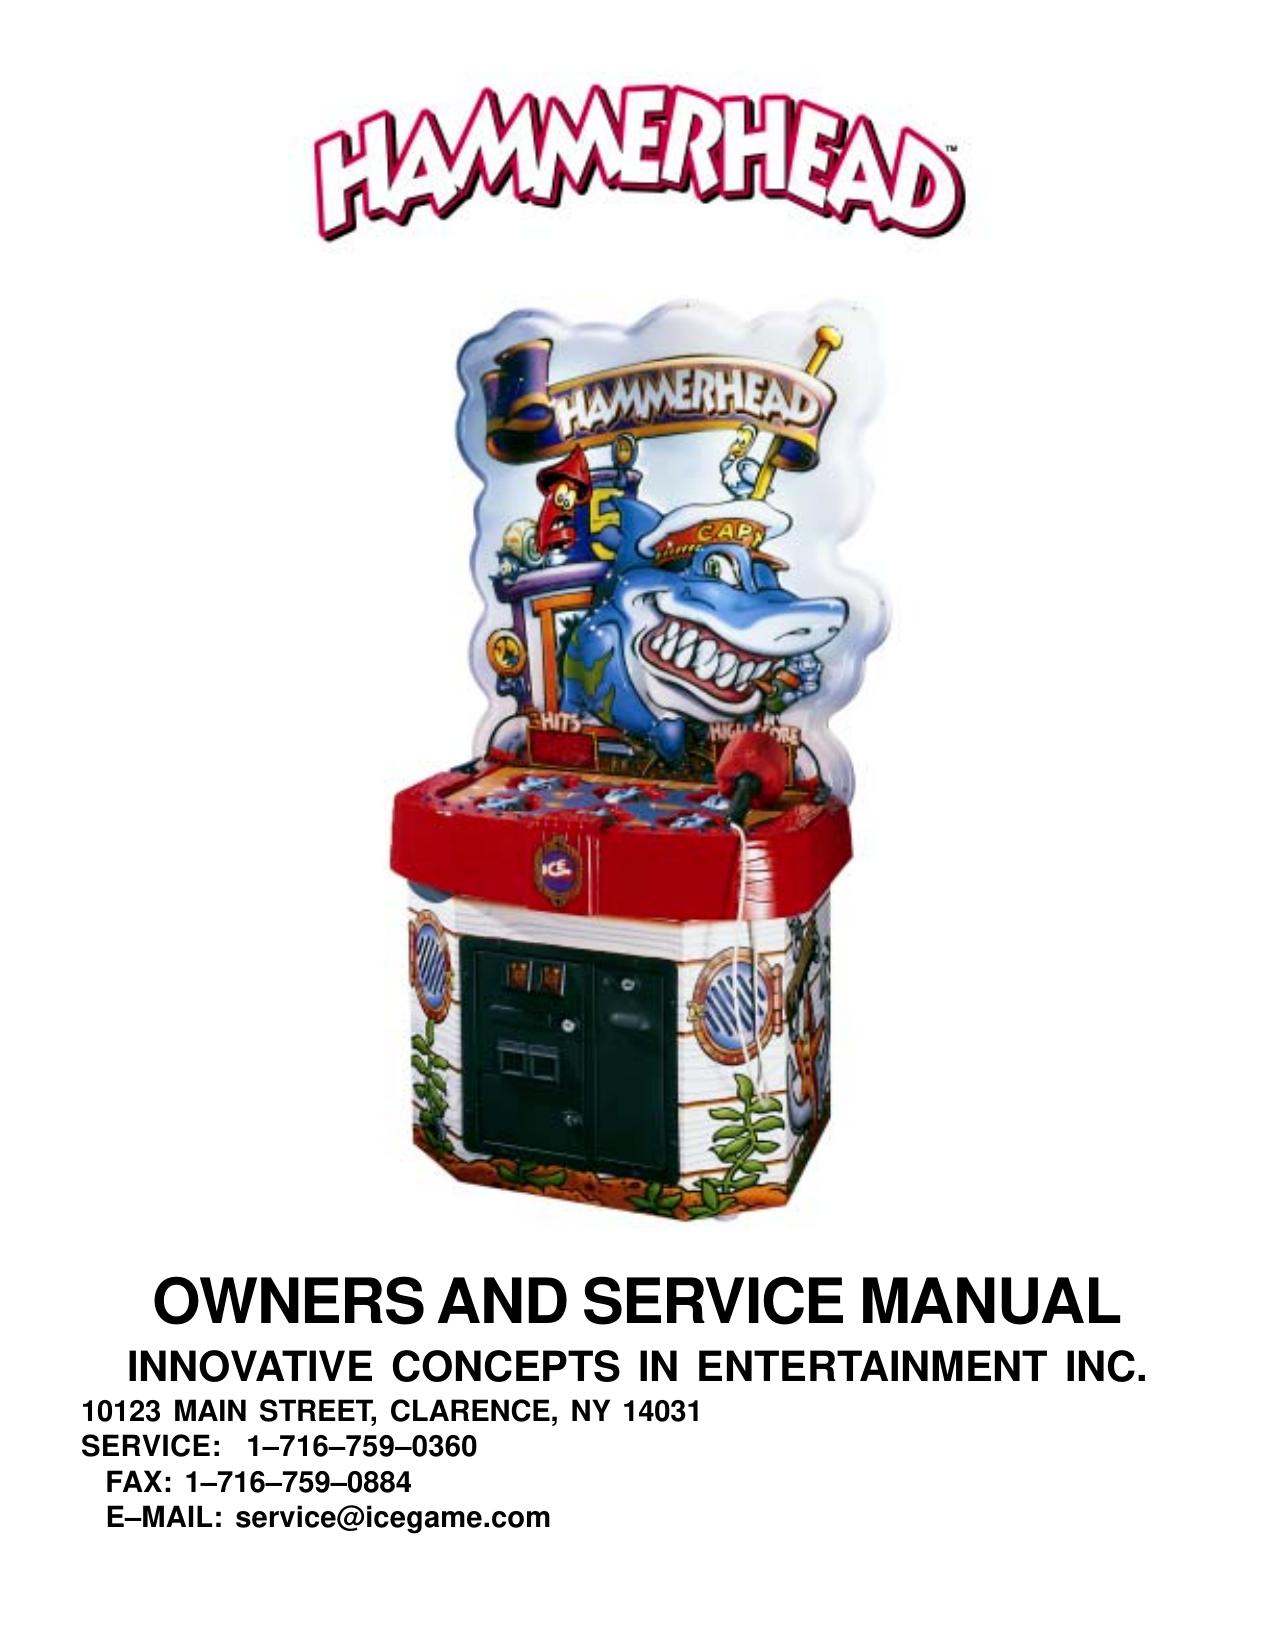 Hammerhead Service Manual